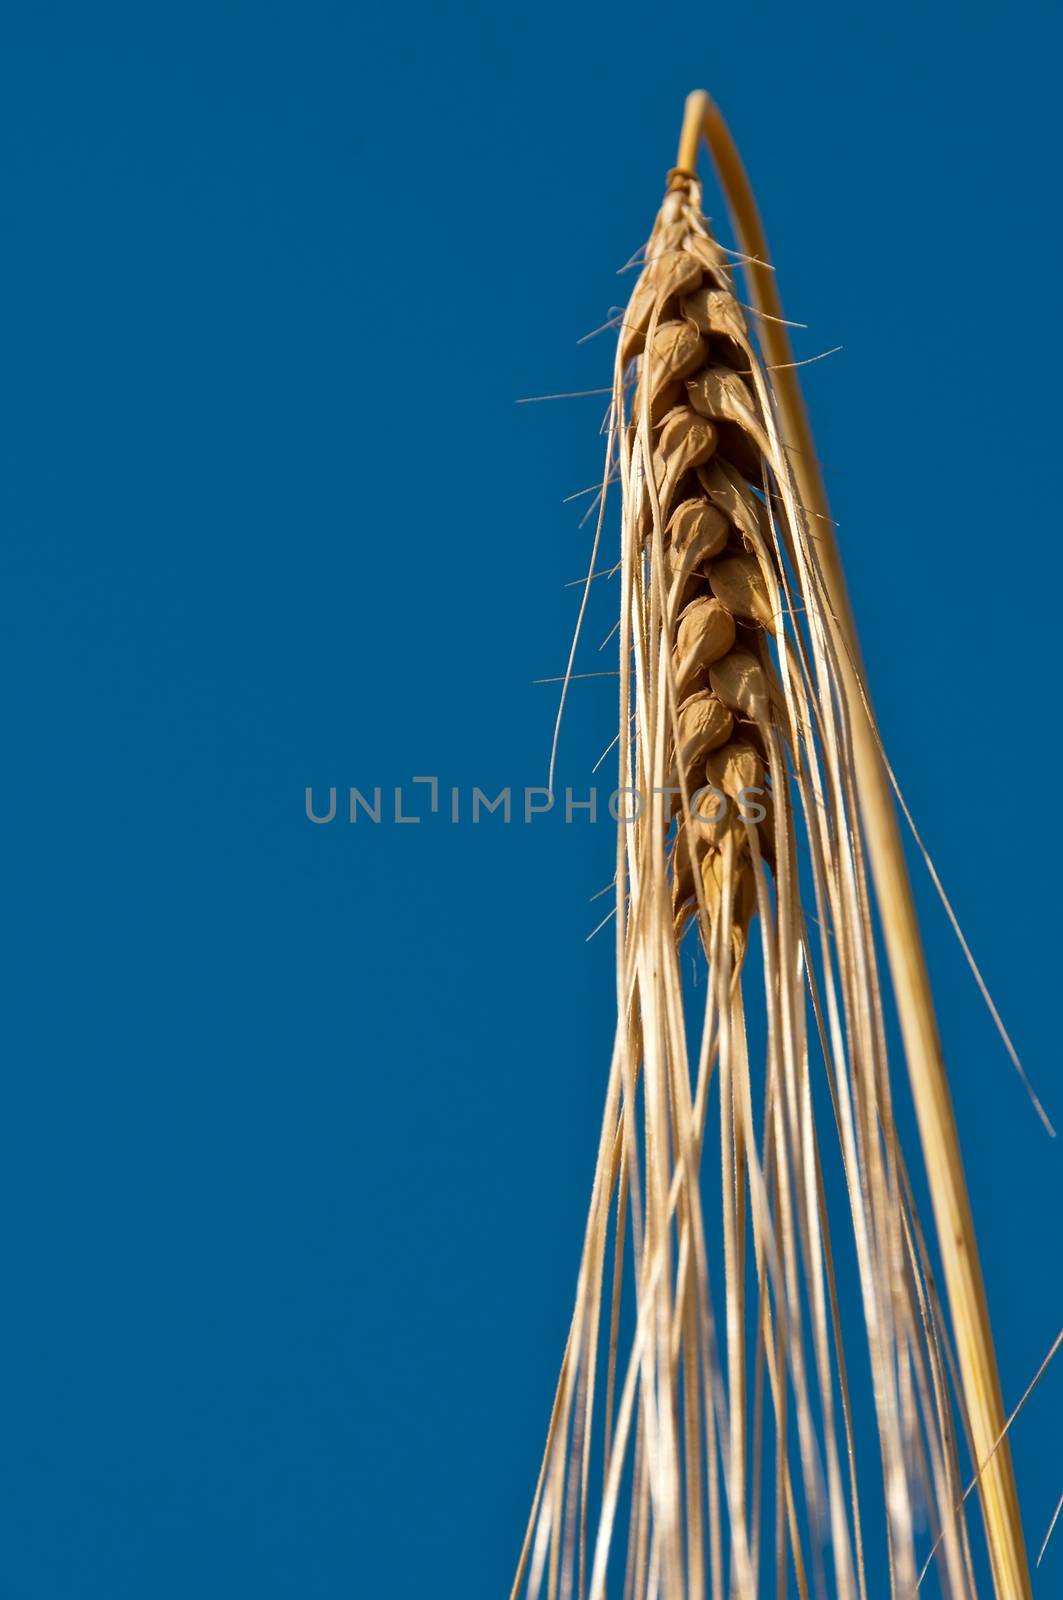 barley, Hordeum vulgare by Jochen